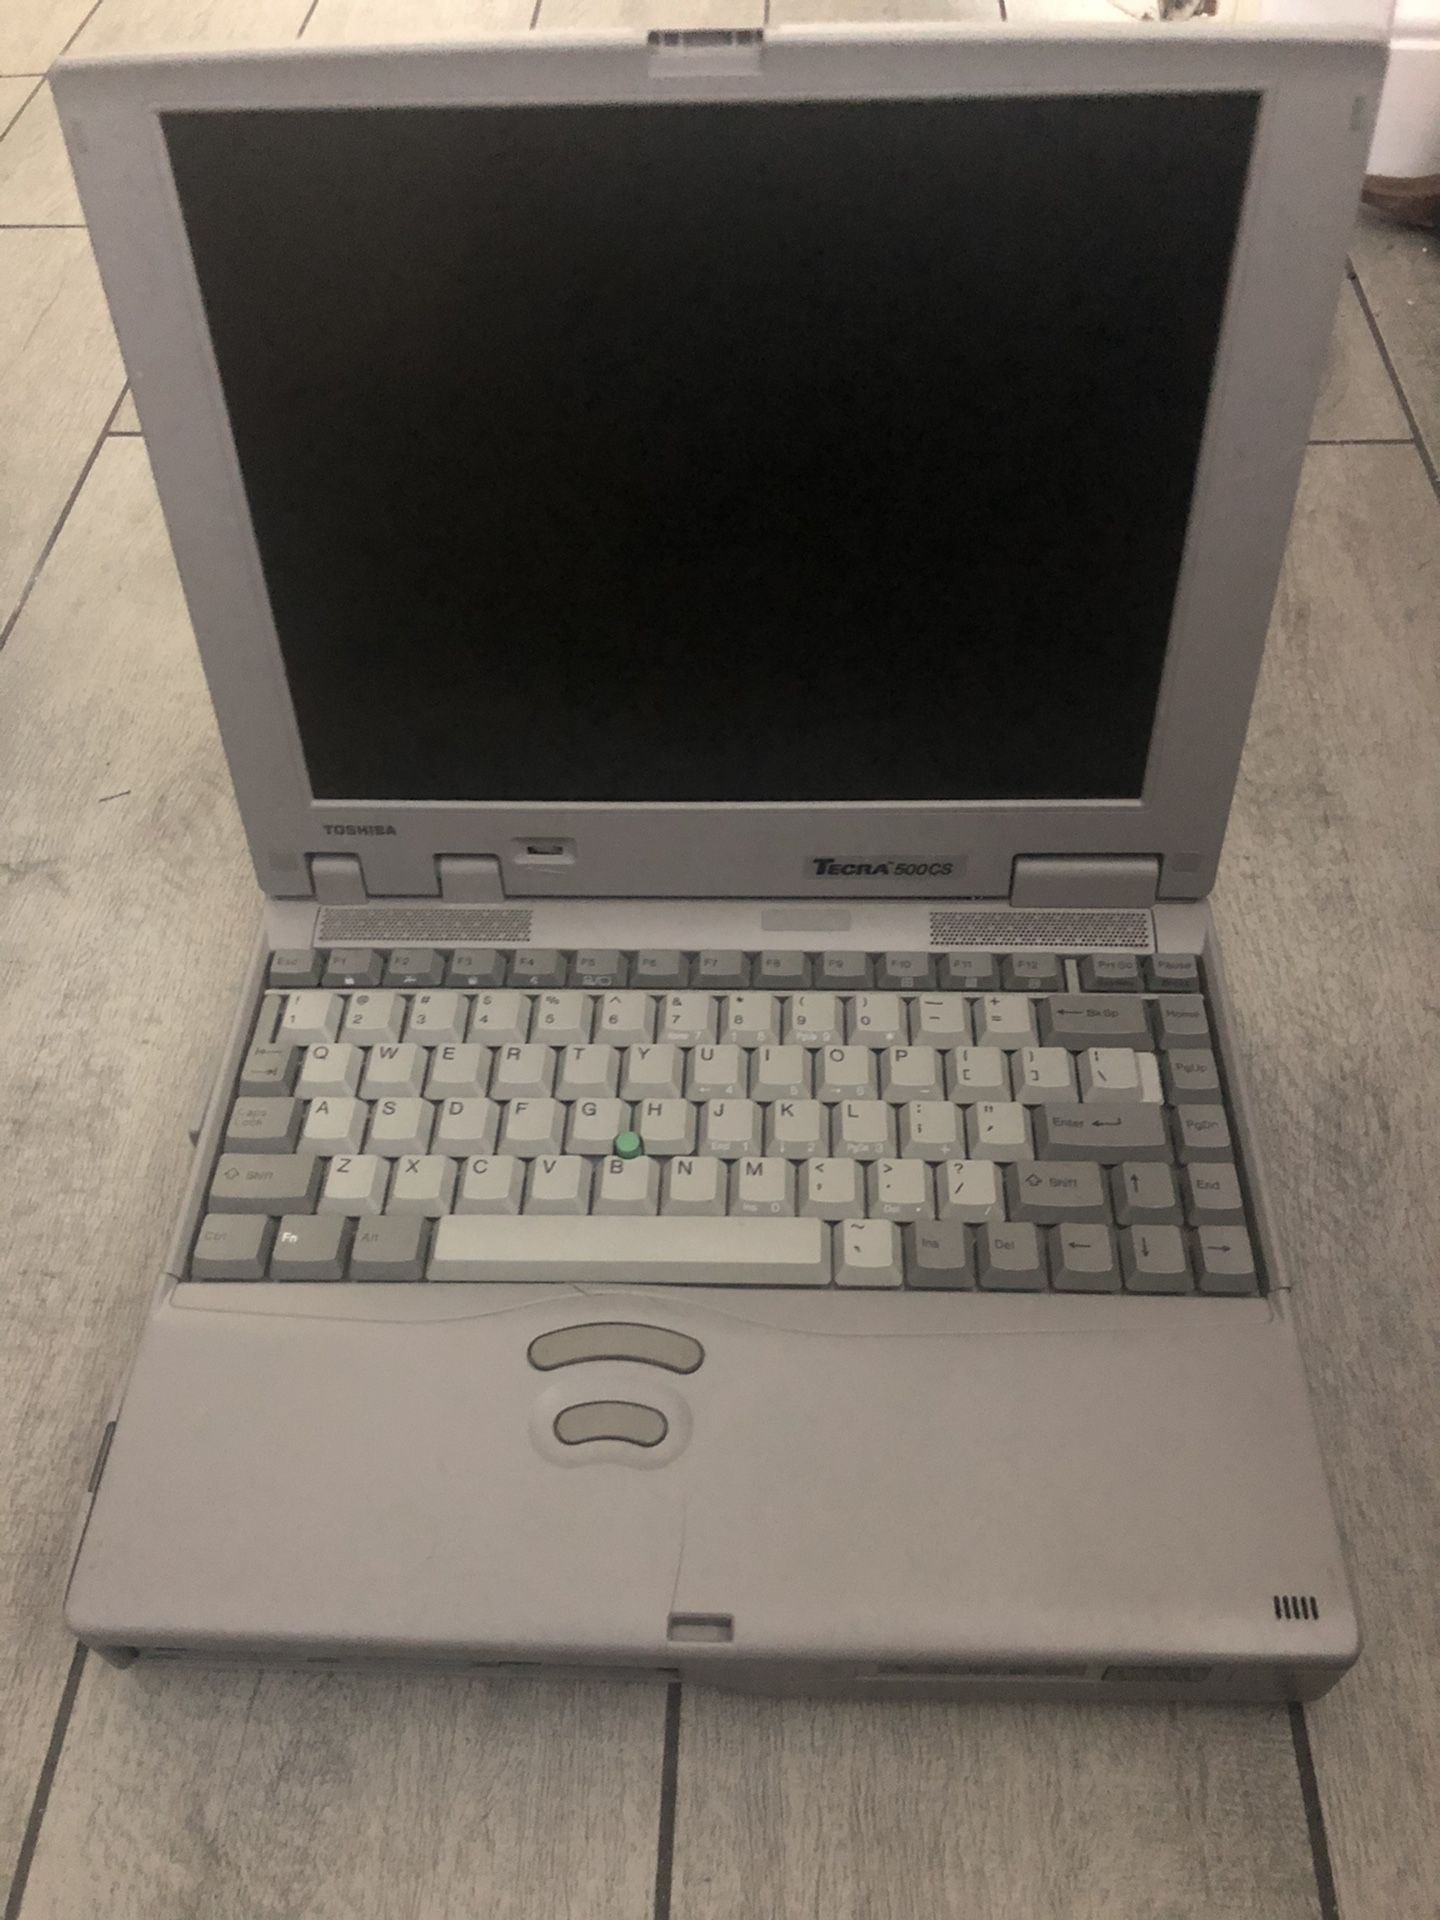 Vintage laptop Toshiba 500S